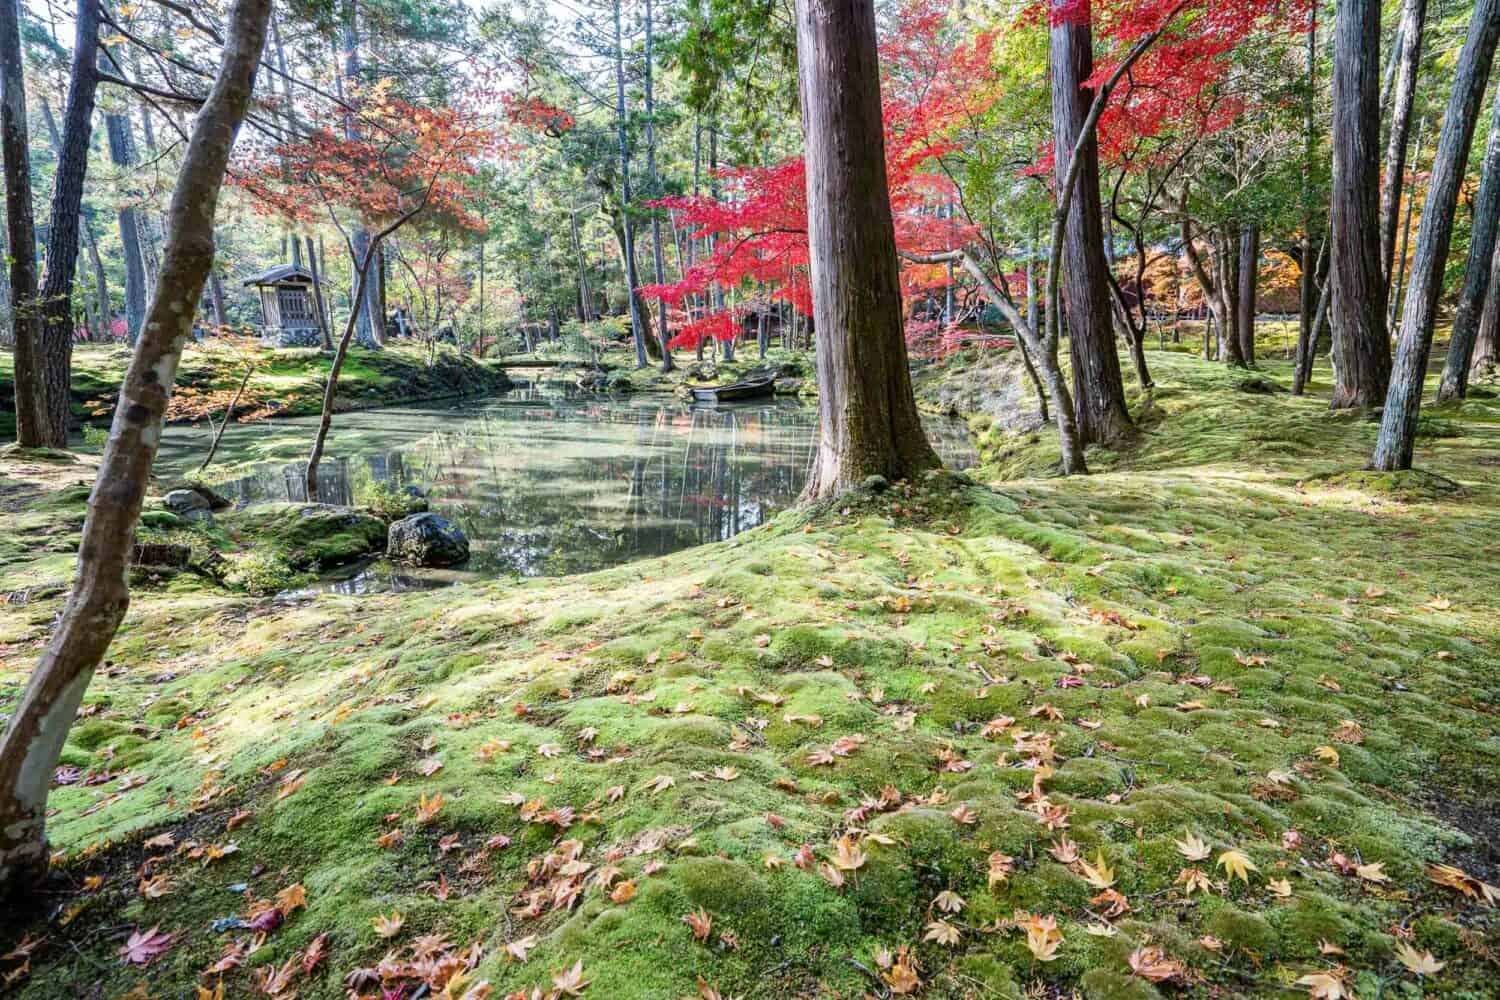 Mossy garden, pond and red maple trees at Saihoji aka Kokedera or Kyoto Moss Temple.